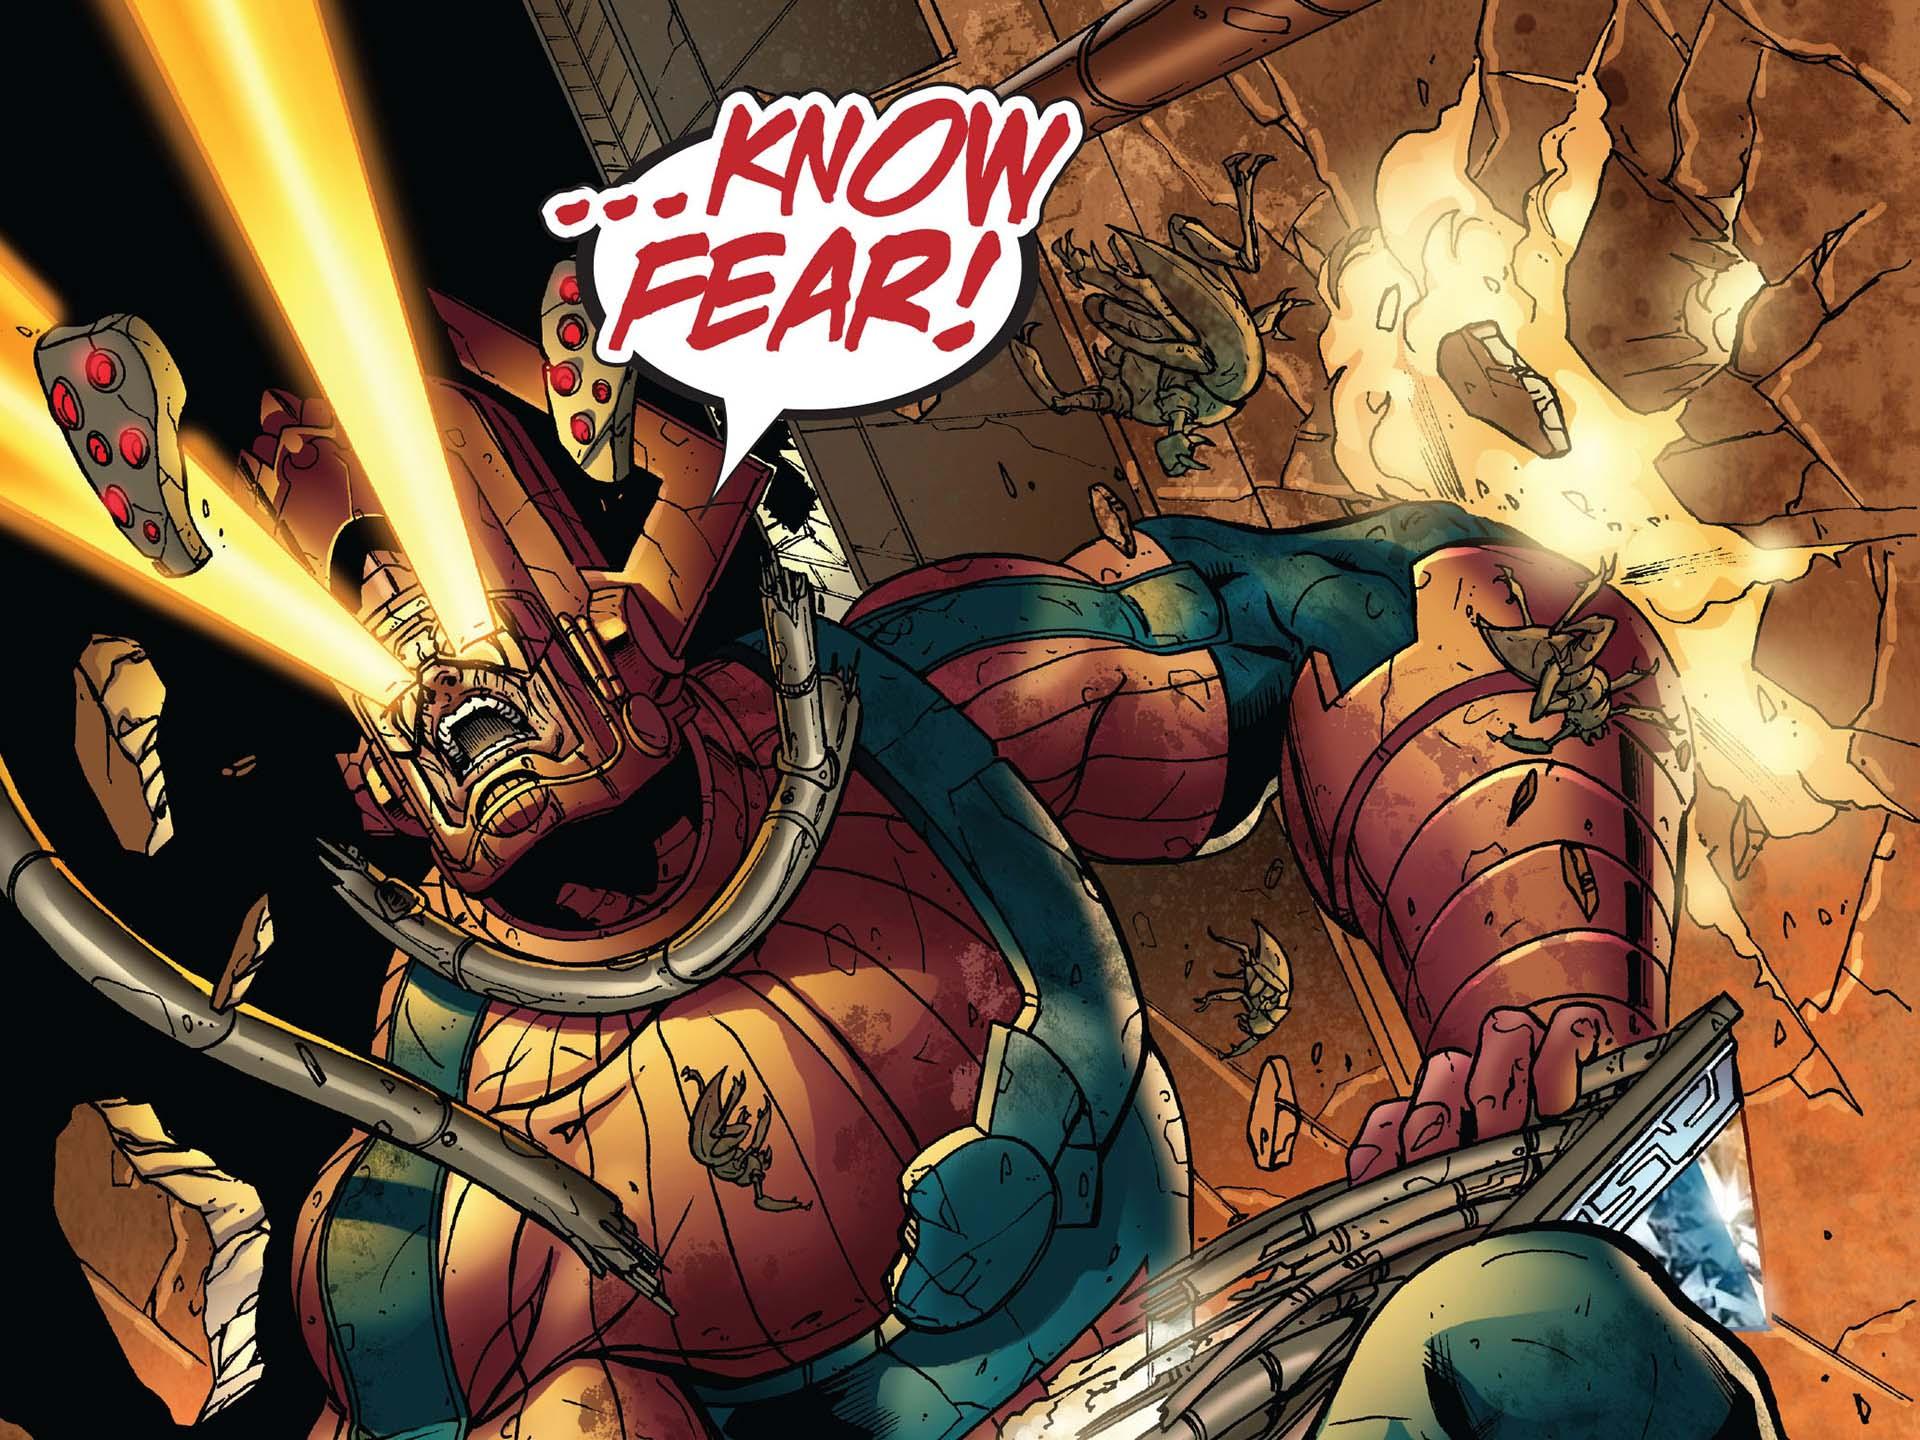 Galactus - marvel comics - گالاکتوس - مارول - چهار شگفت انگیز